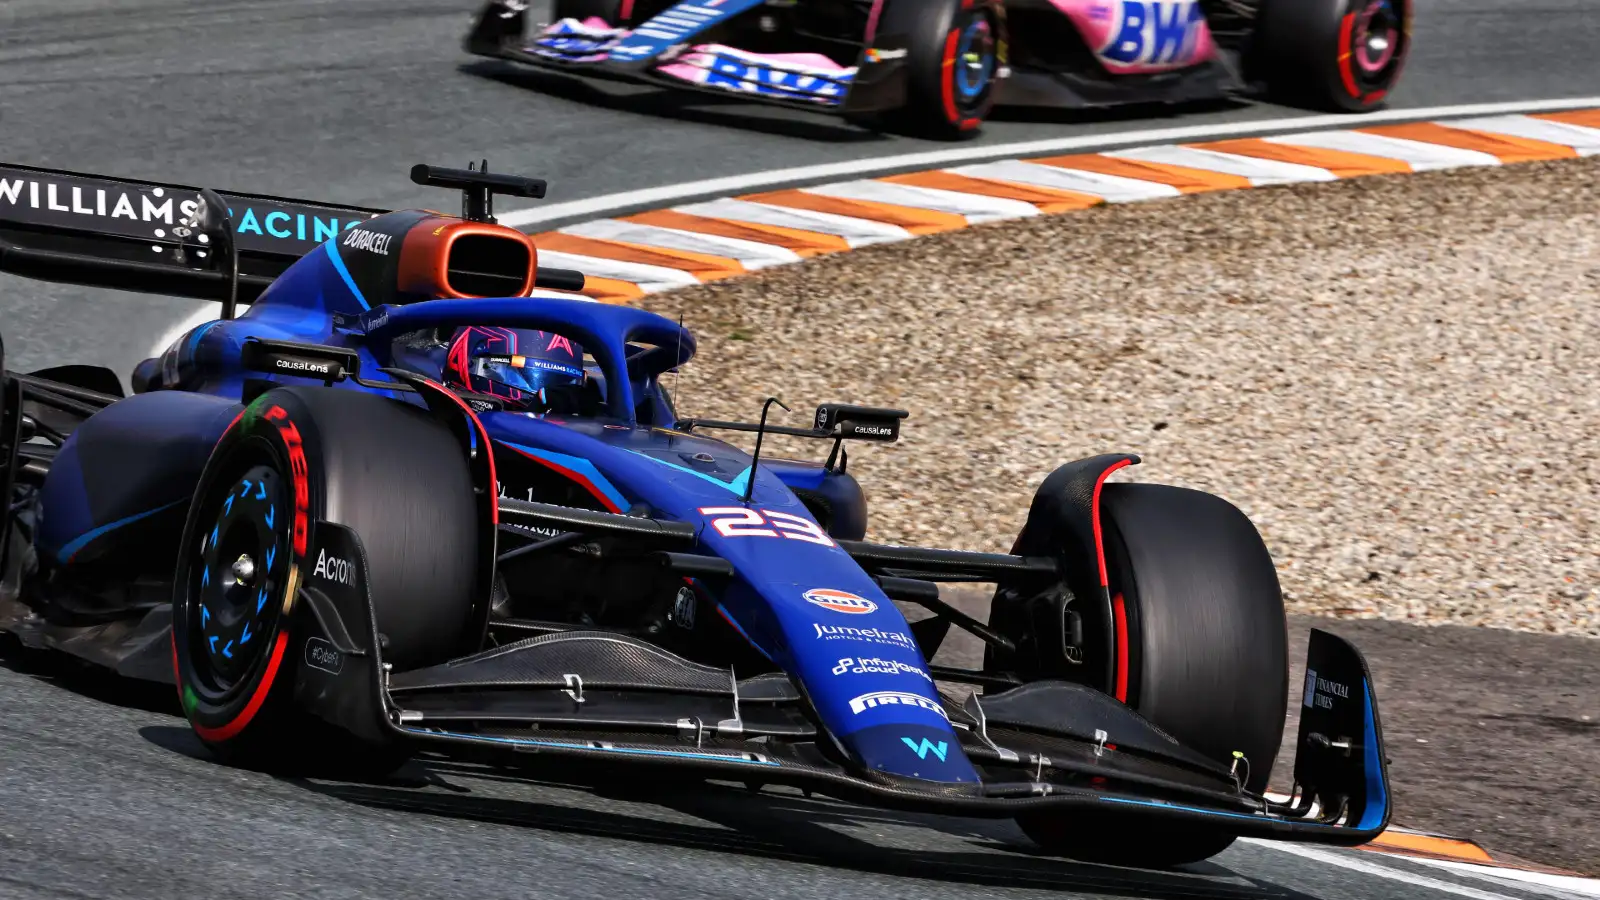 Alex Albon, Williams F1 driver, races to eighth place at the Dutch Grand Prix at Zandvoort